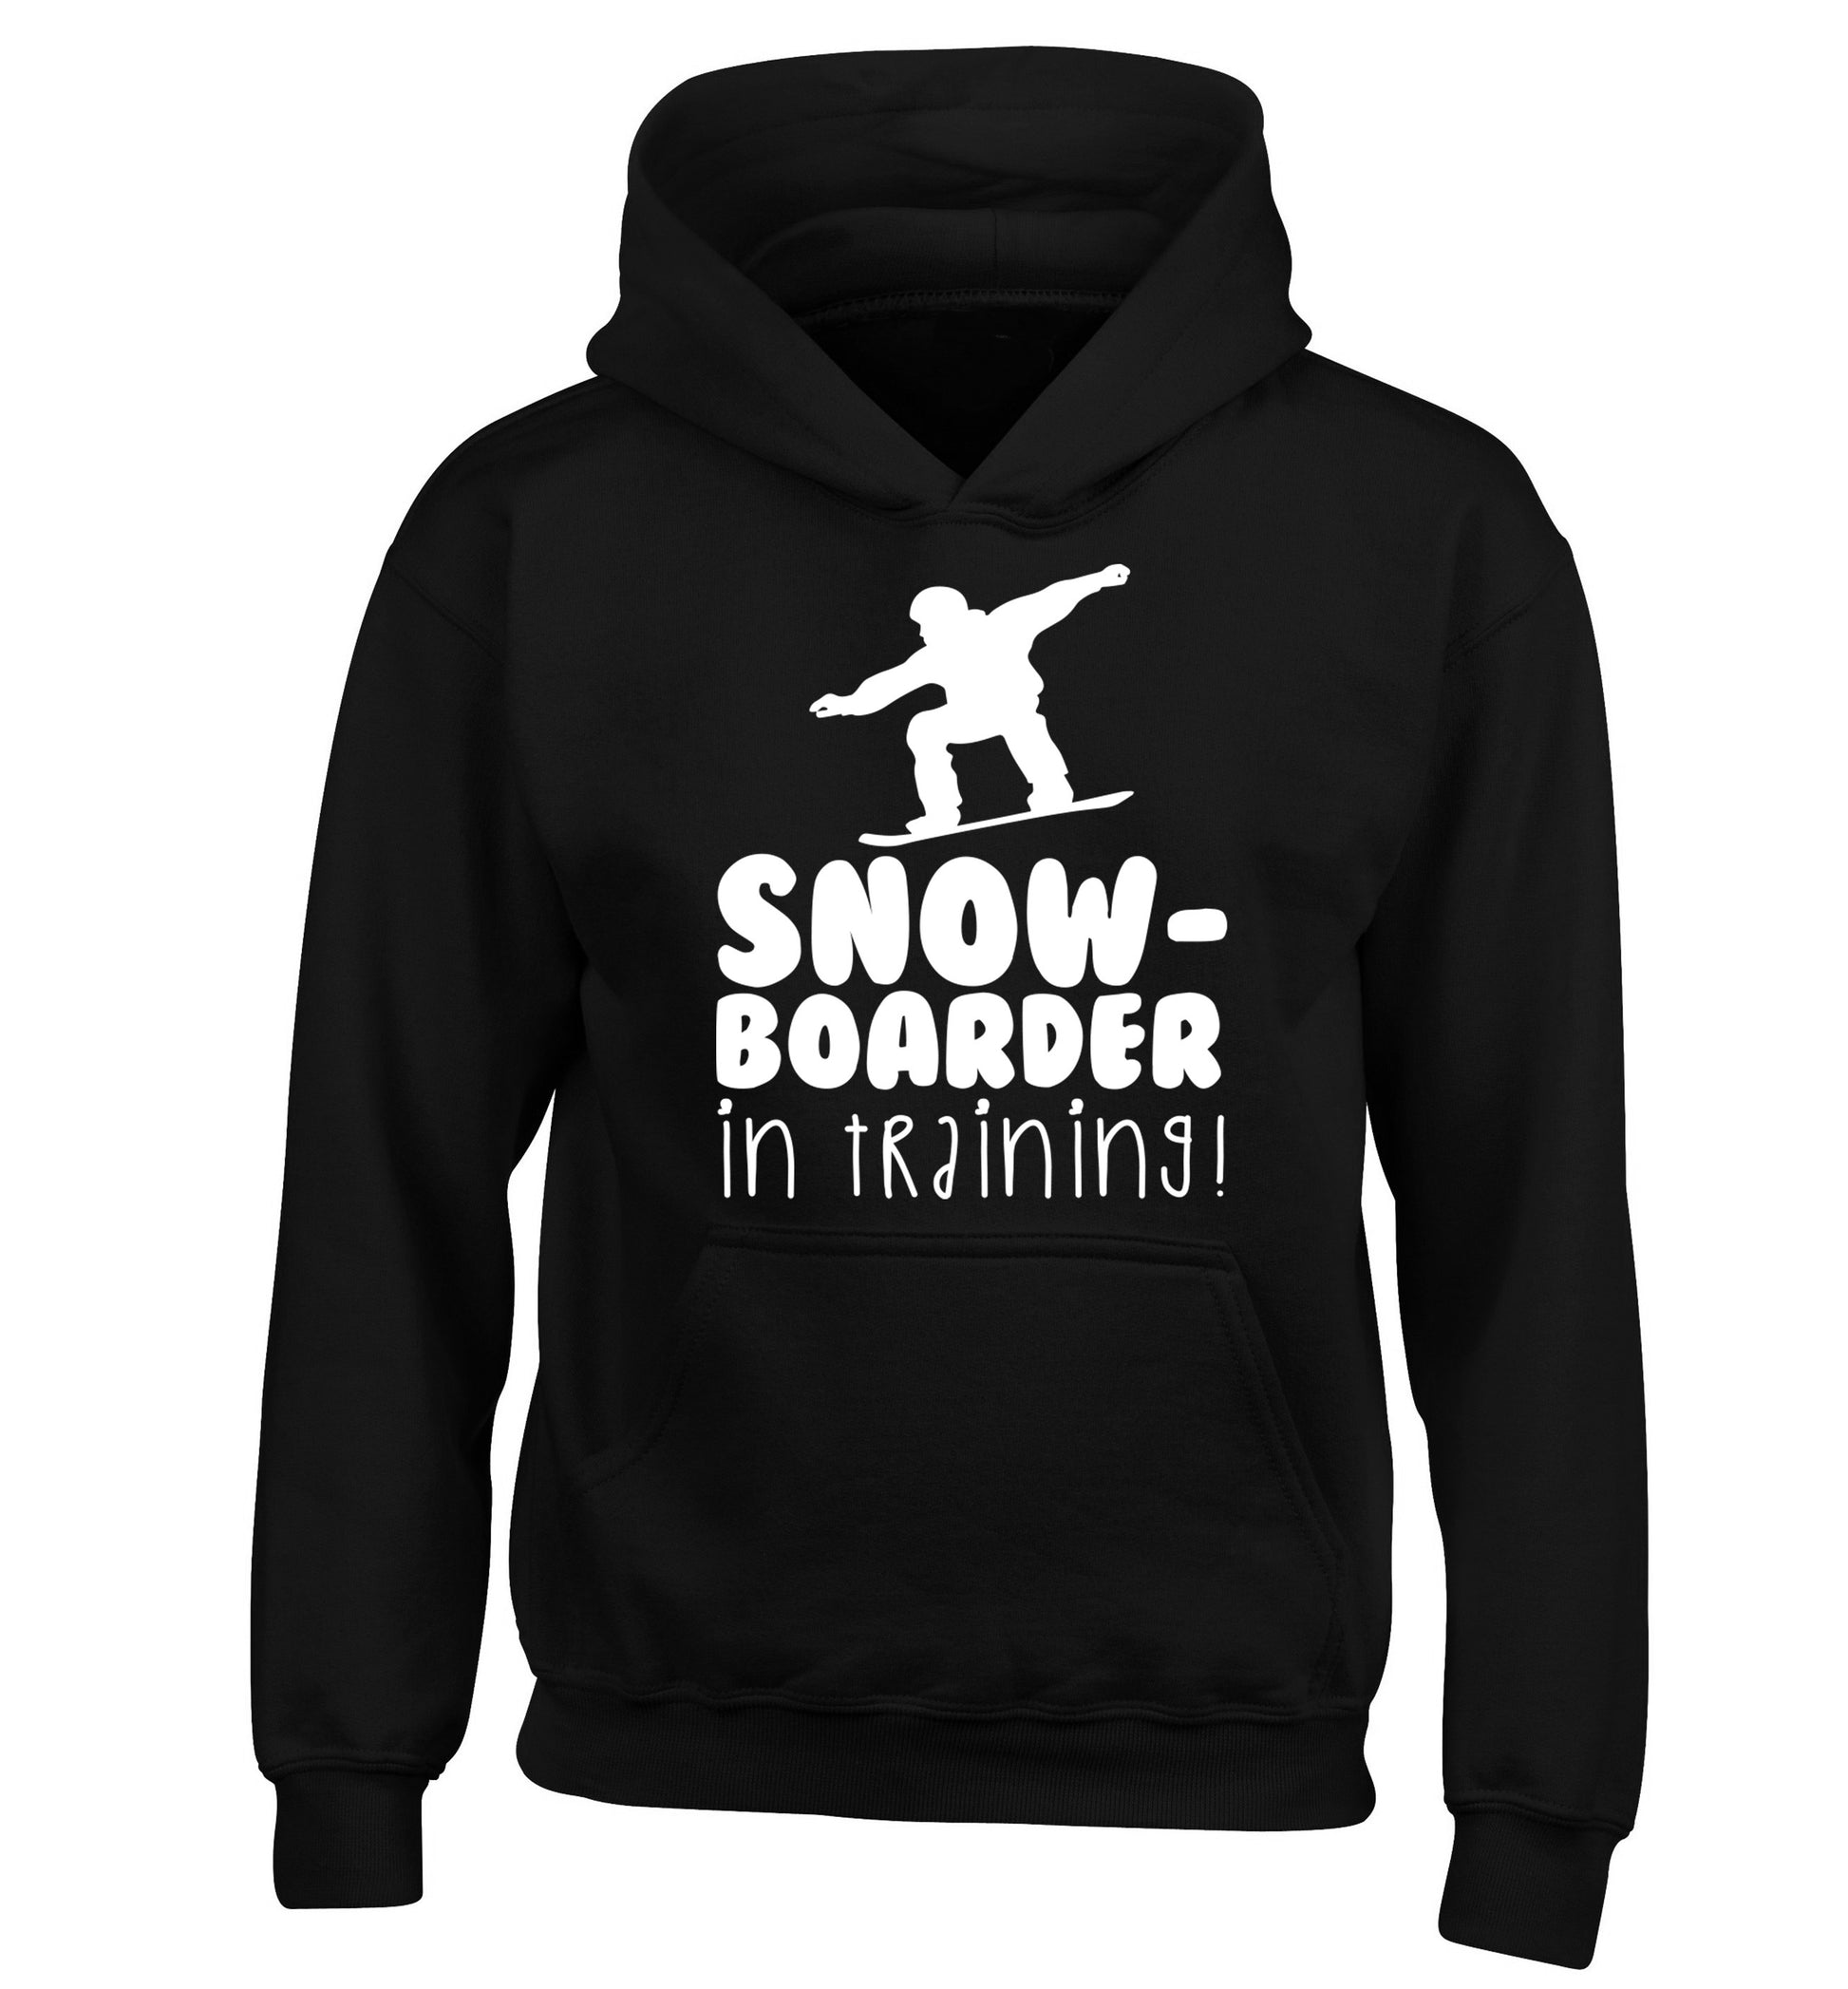 Snowboarder in training children's black hoodie 12-14 Years